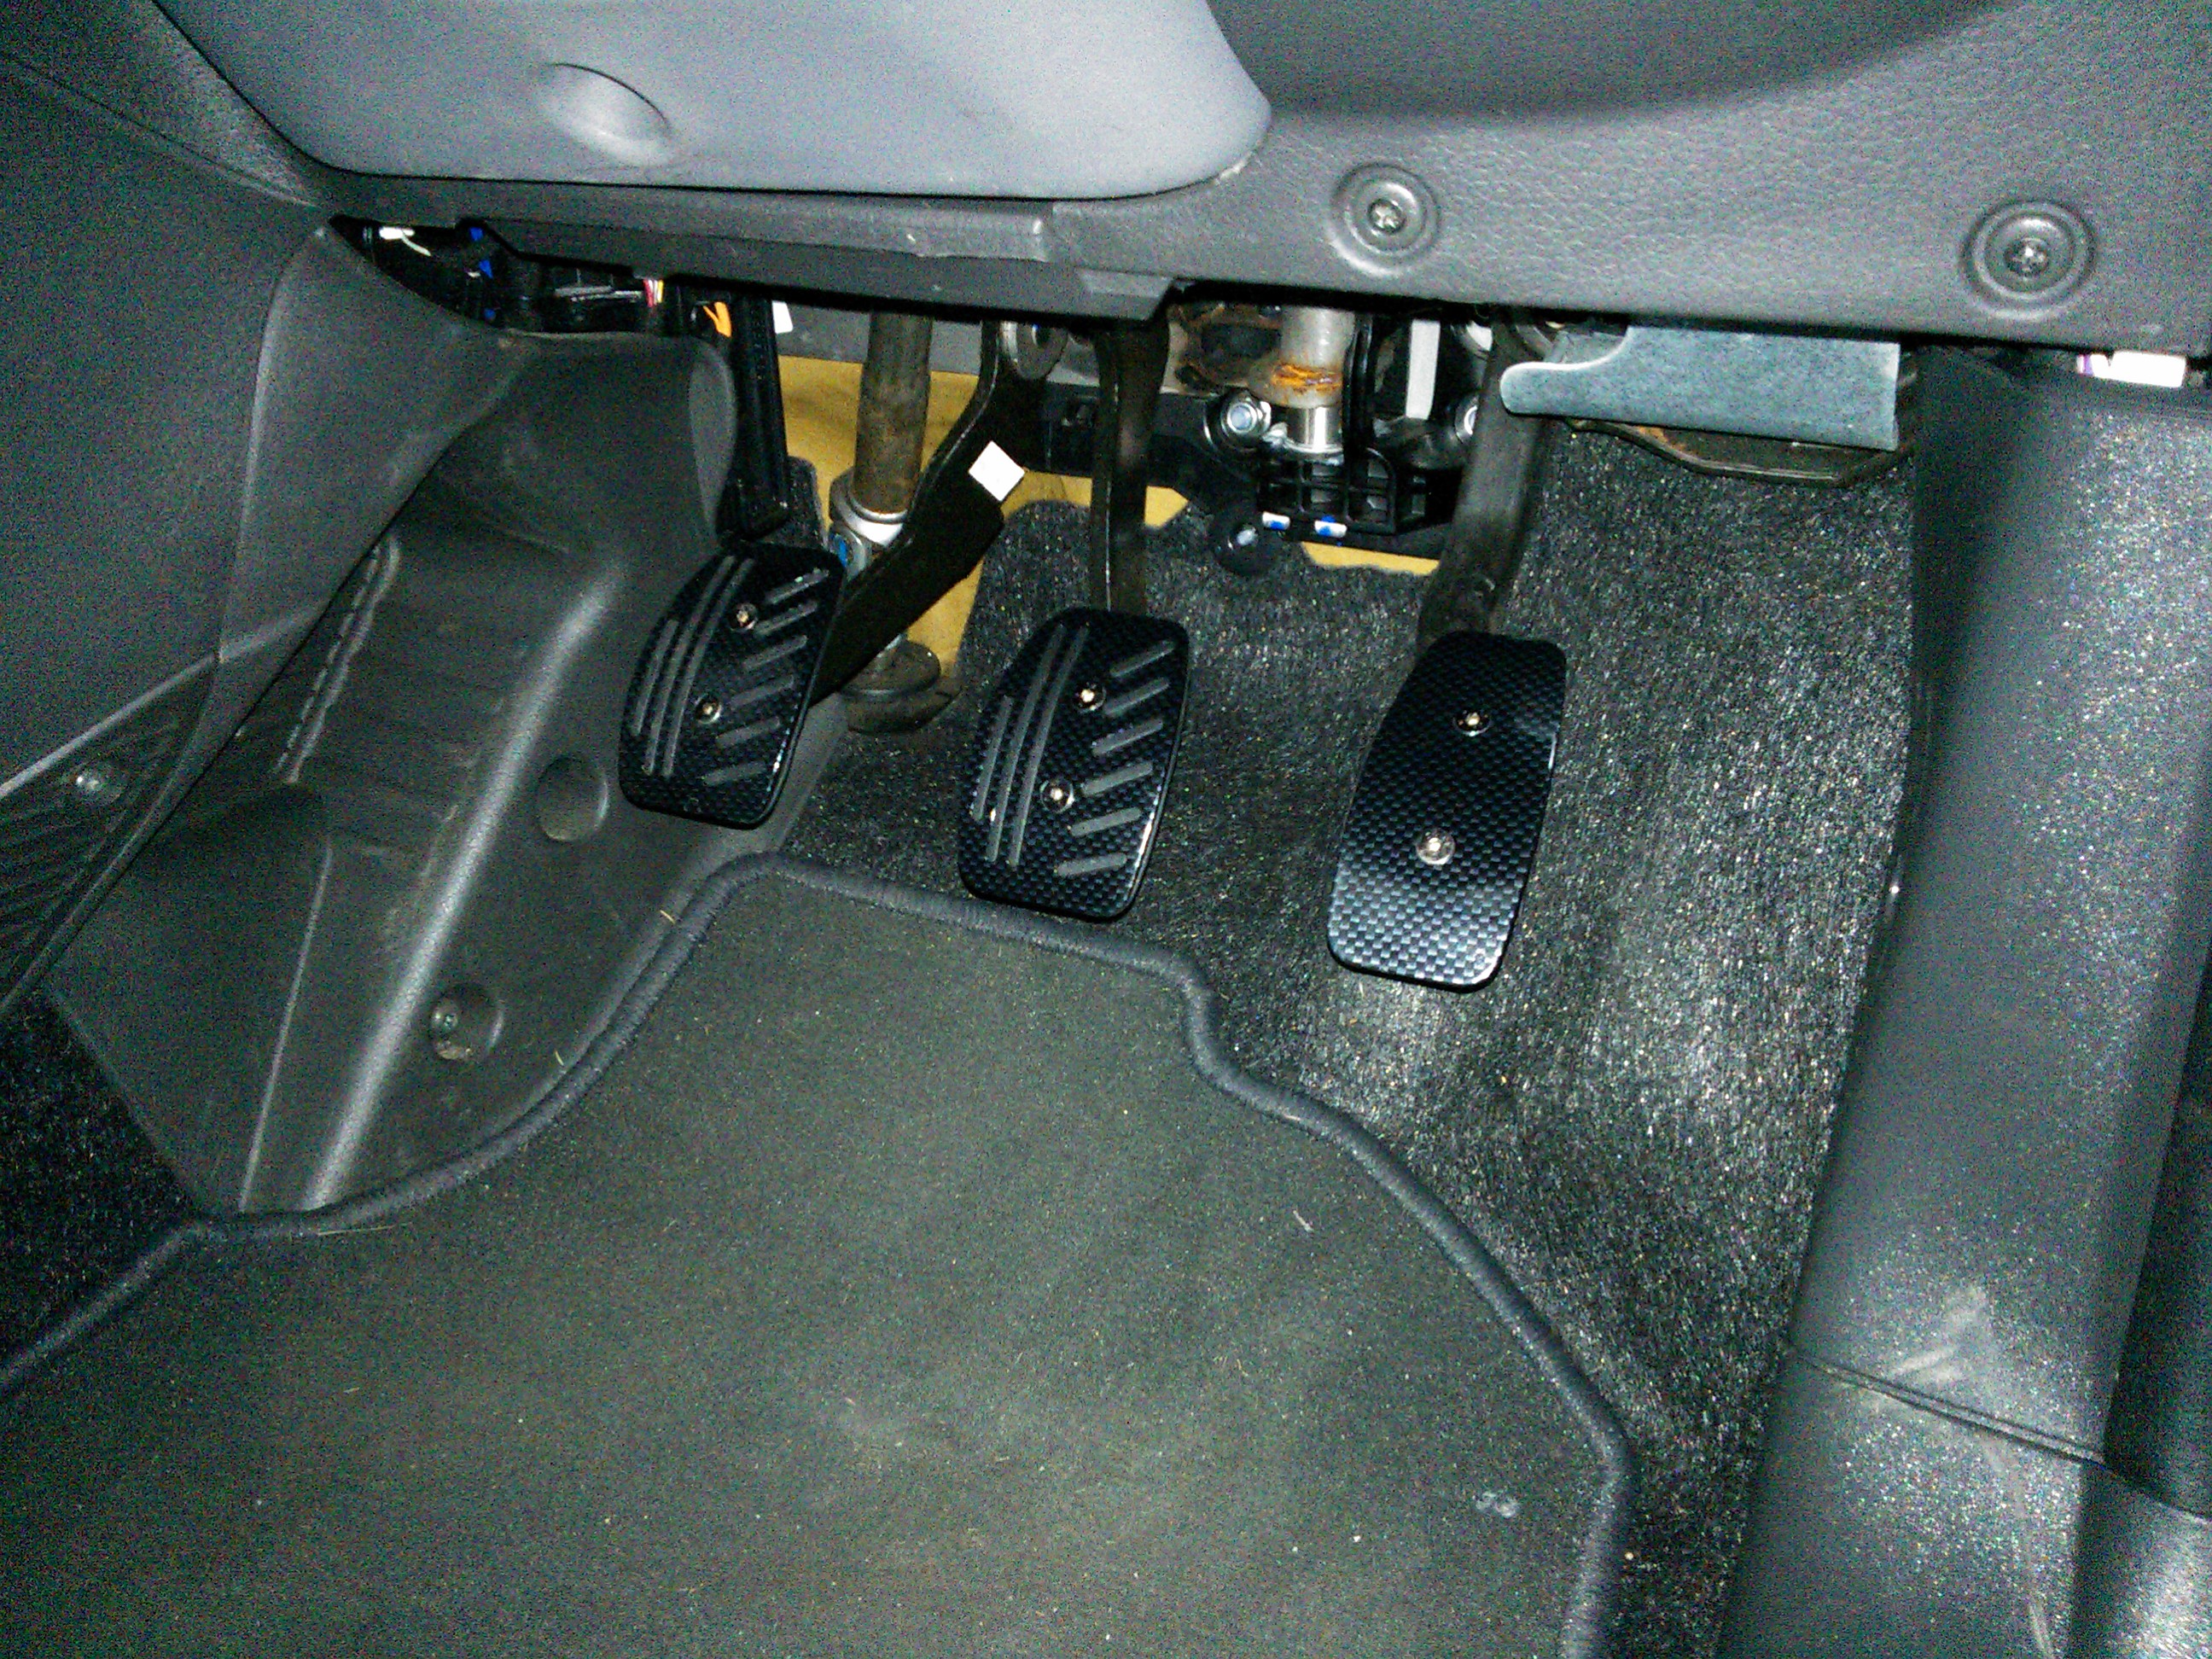 OMP carbon pedals